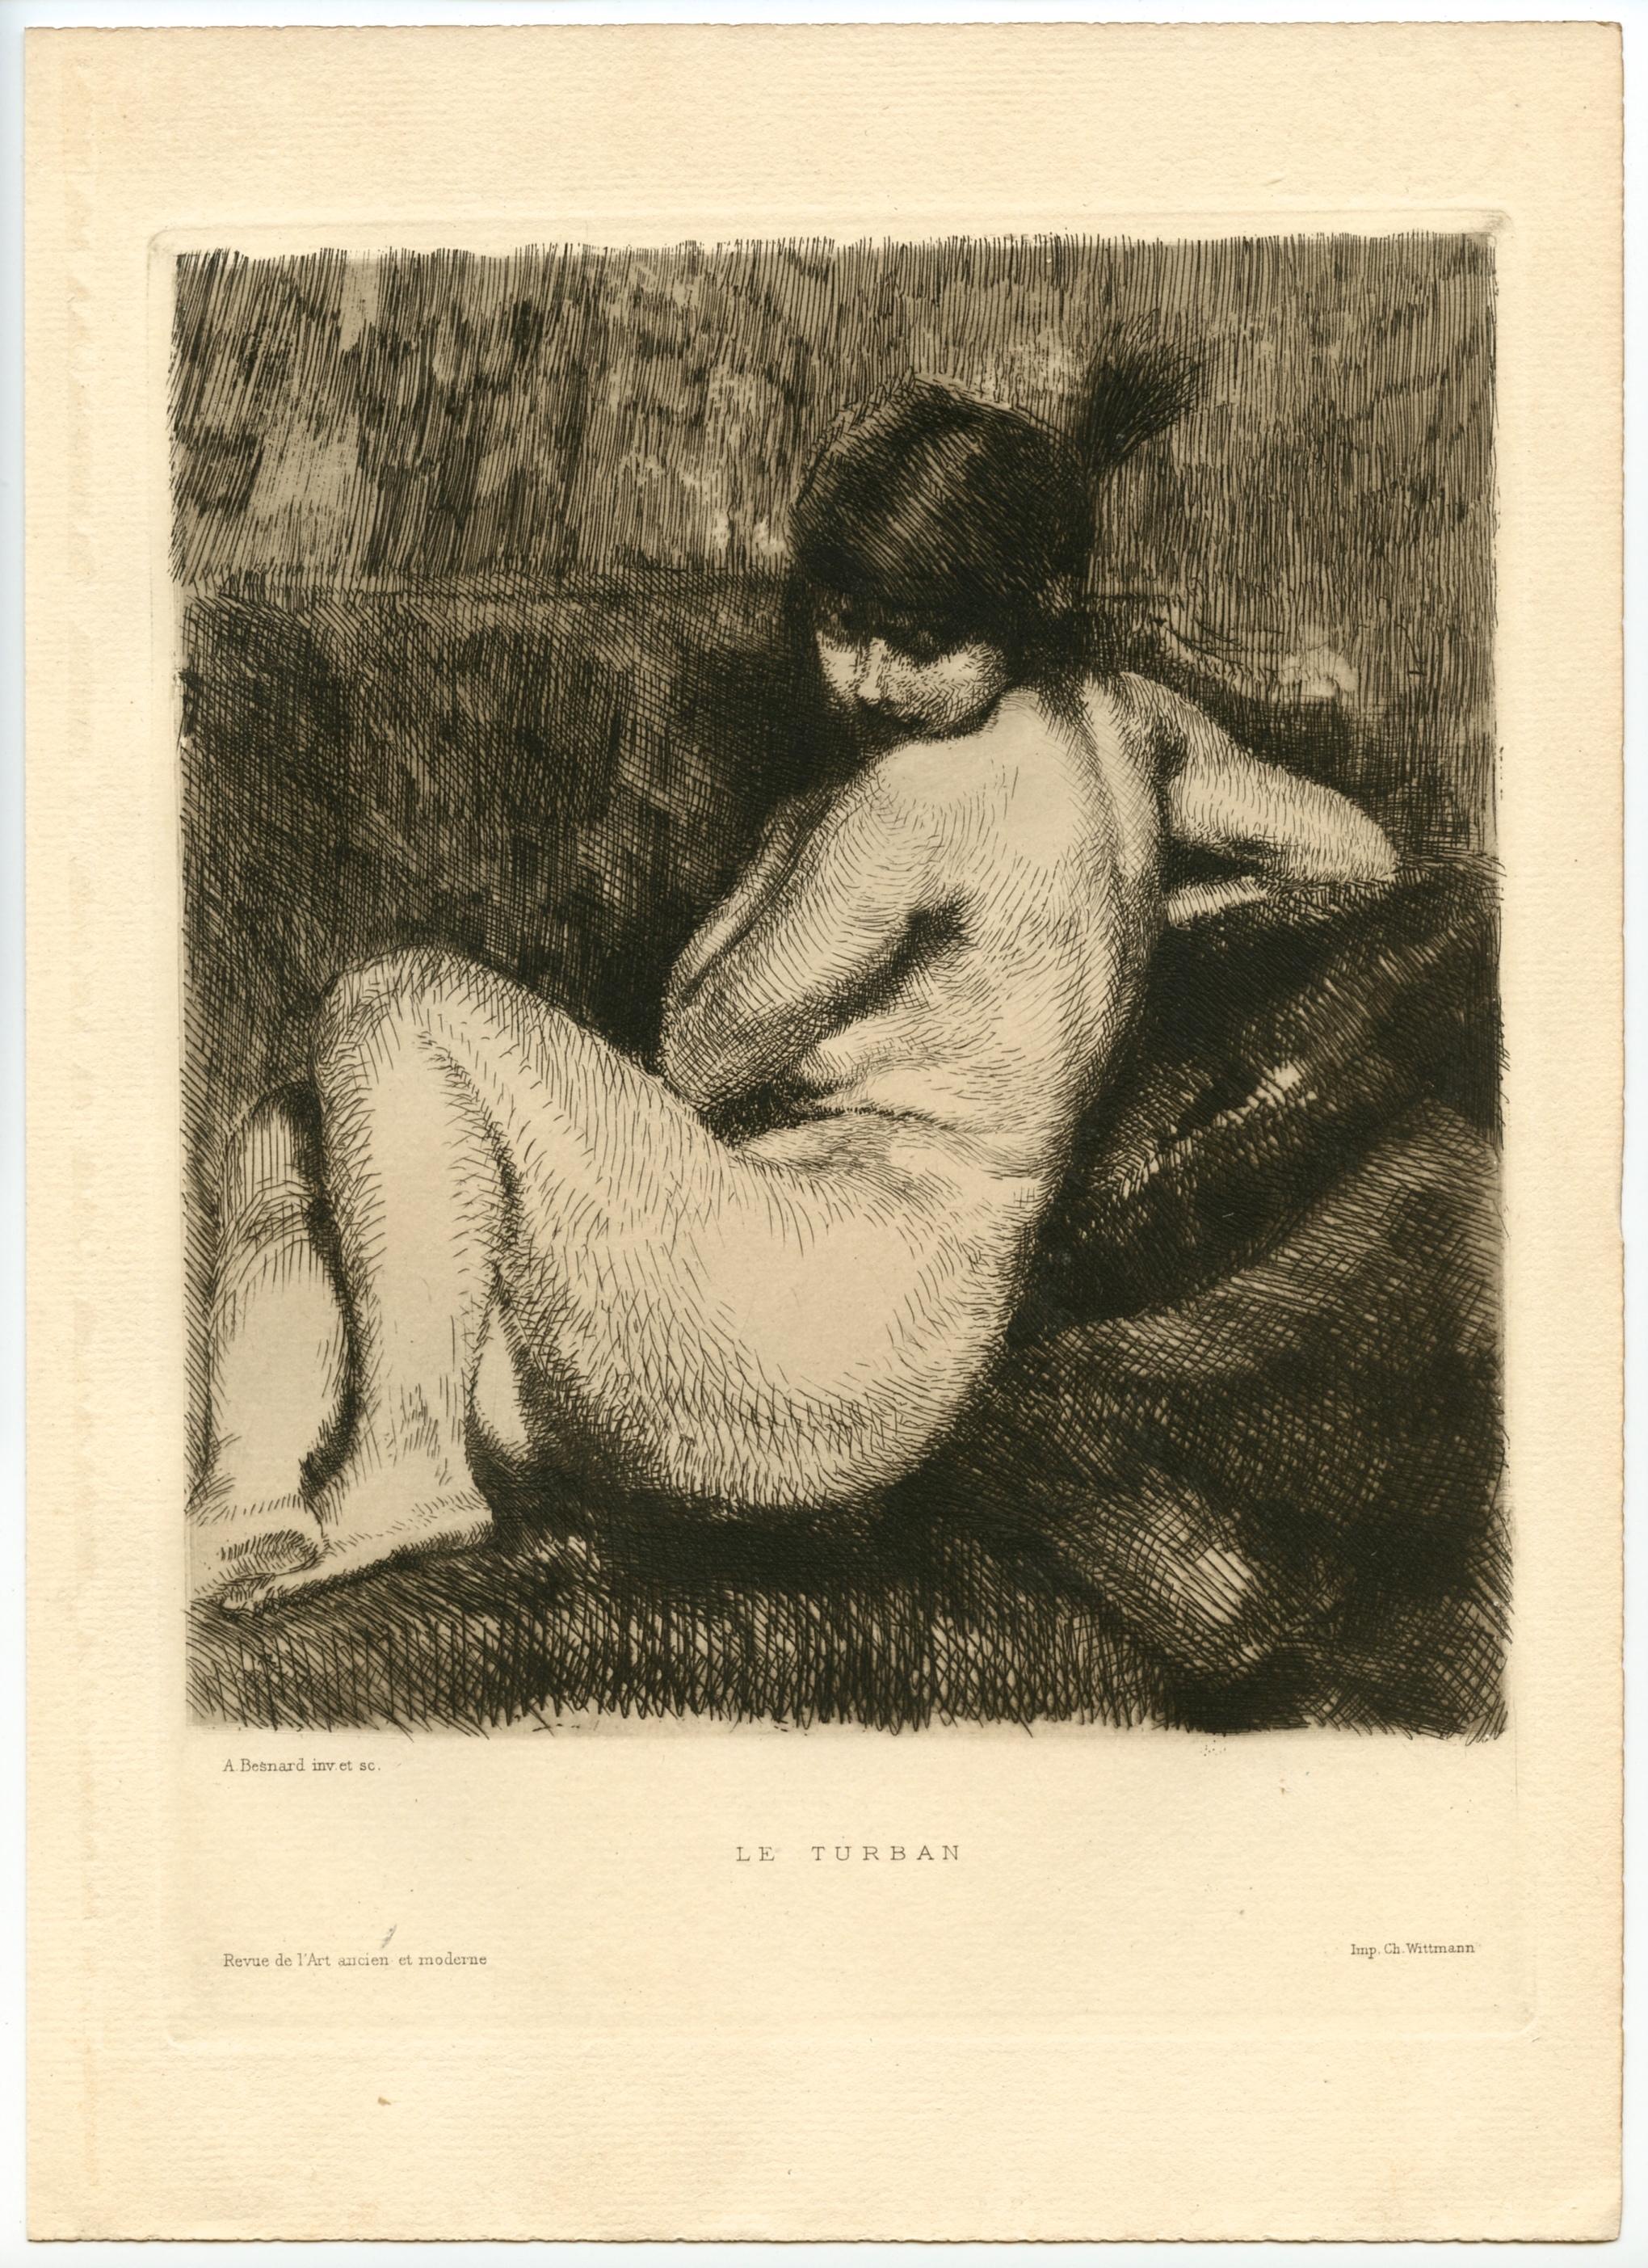 « Le turban » eau-forte originale - Print de Albert Besnard